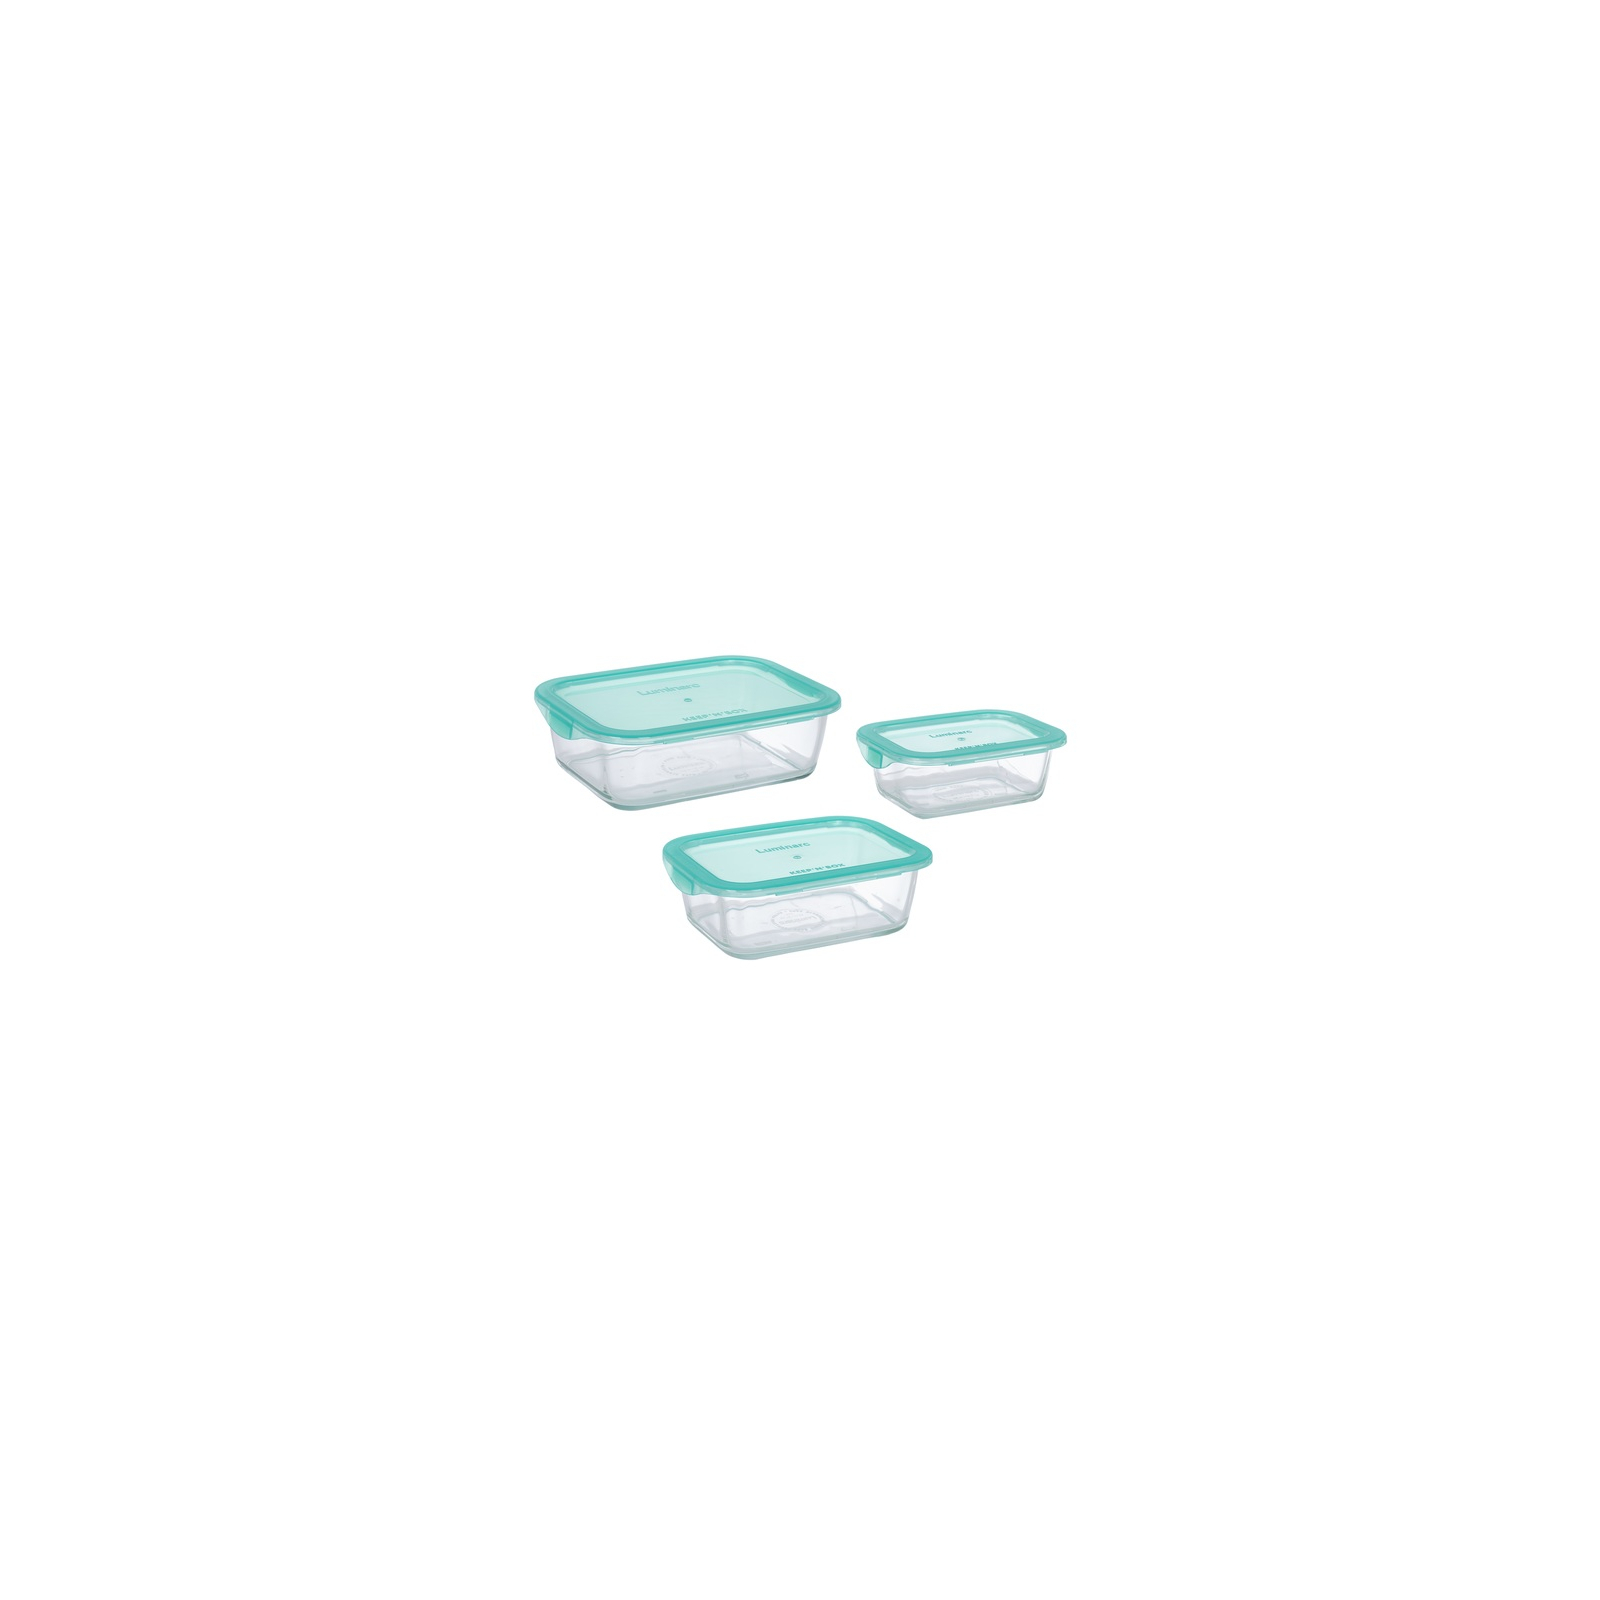 Пищевой контейнер Luminarc Keep'n Box Lagoon набор 3шт прямоуг. 380мл/820мл/1220мл + су (P6634)